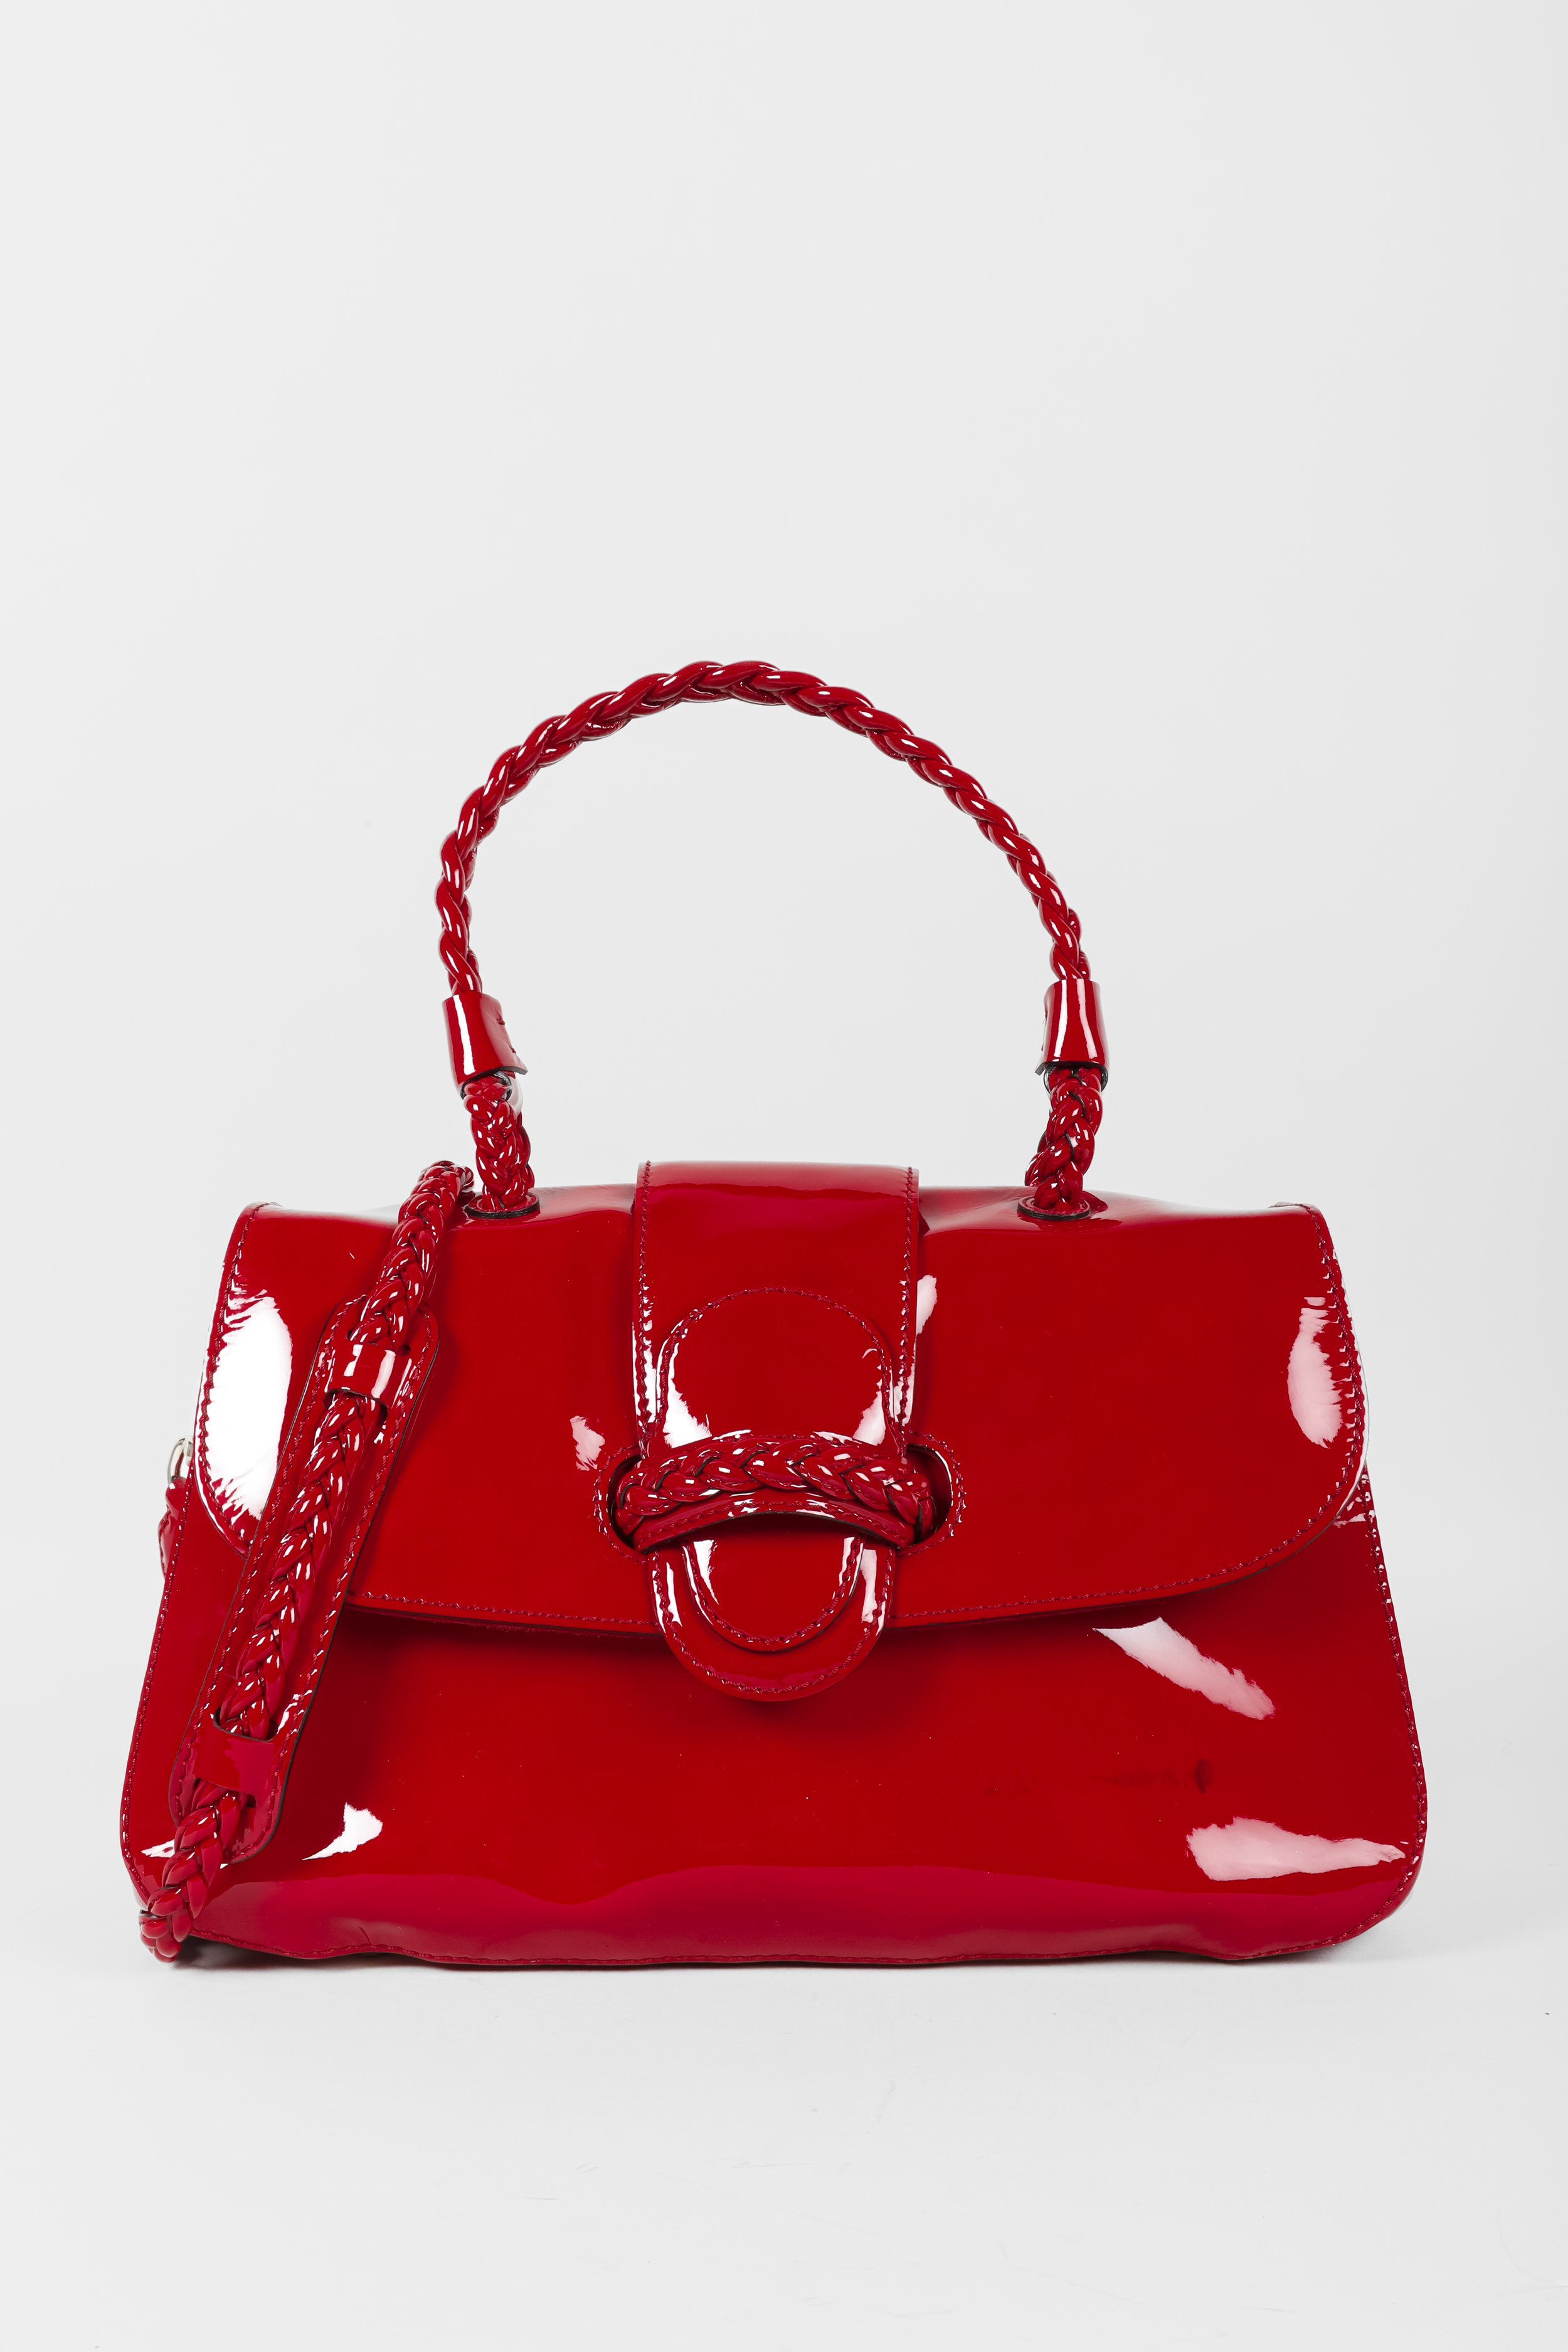 Valentino Garavani Red Patent Leather Braided Shoulder Flap Bag ...